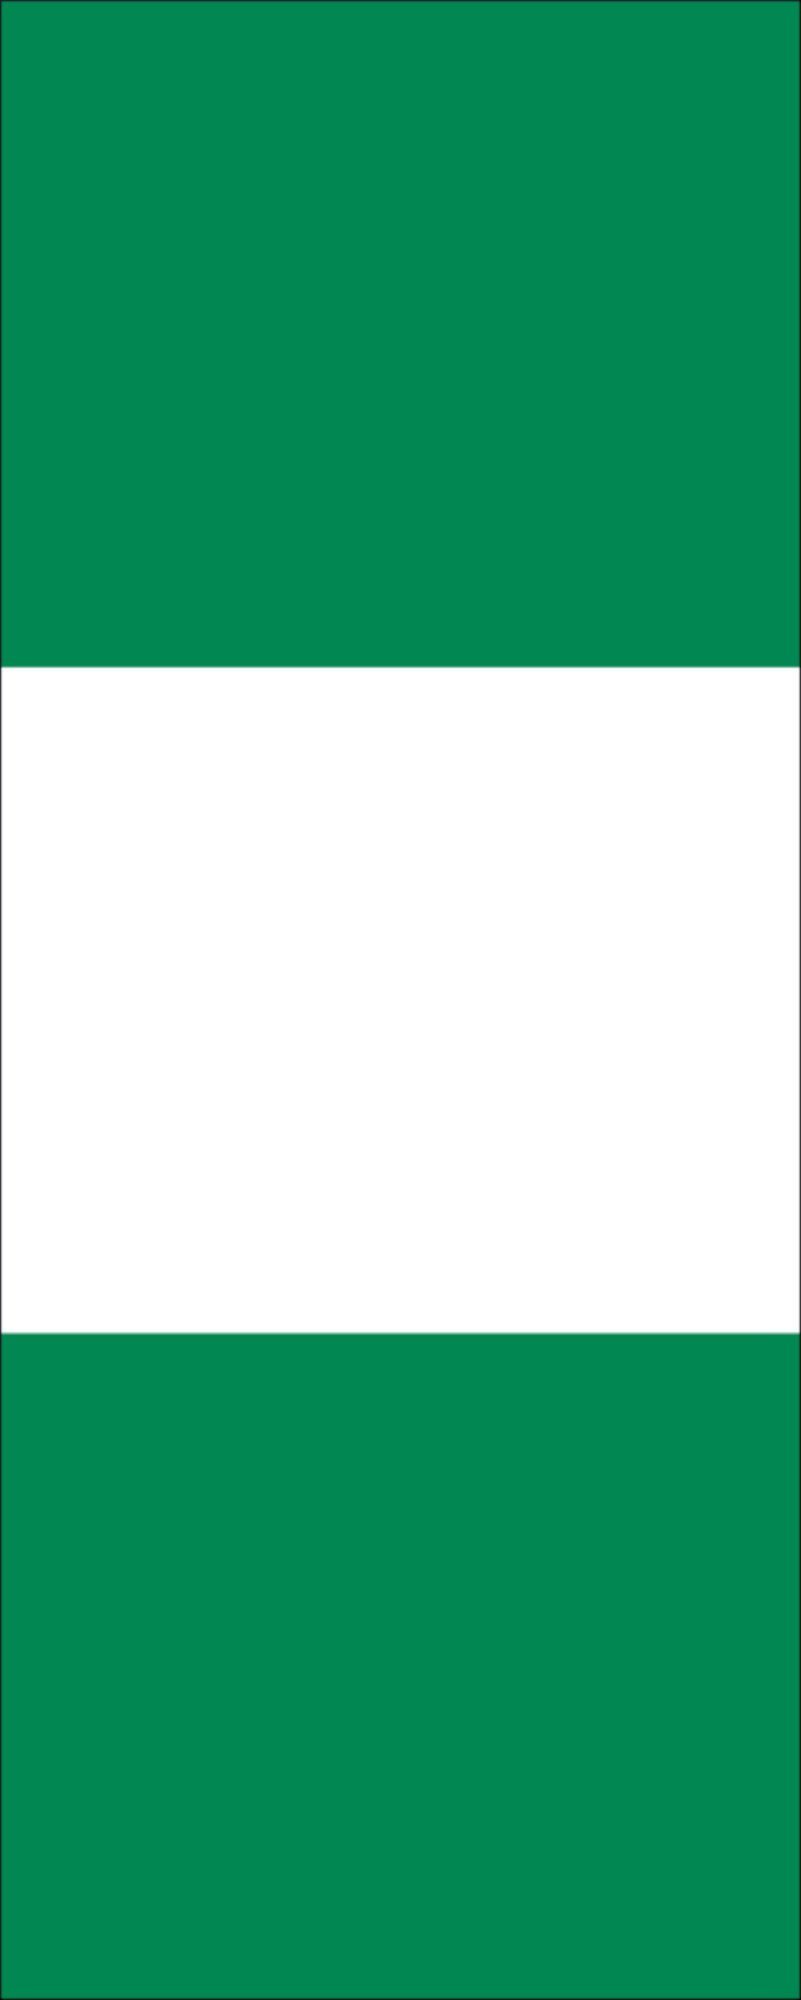 flaggenmeer Flagge Flagge Nigeria 110 g/m² Hochformat